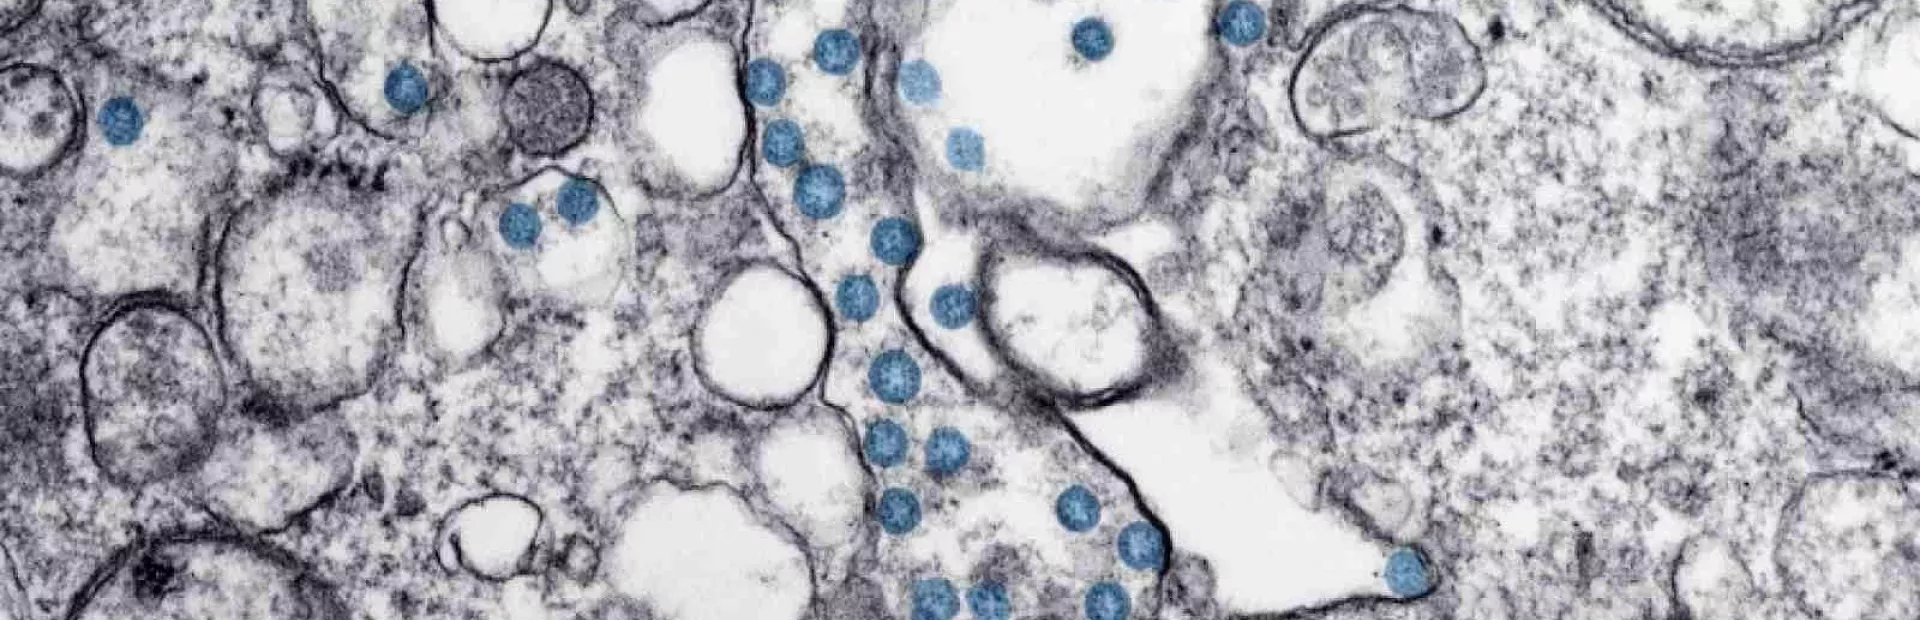 Částice viru SARS CoV 2 na snímku z elektronového mikroskopu.